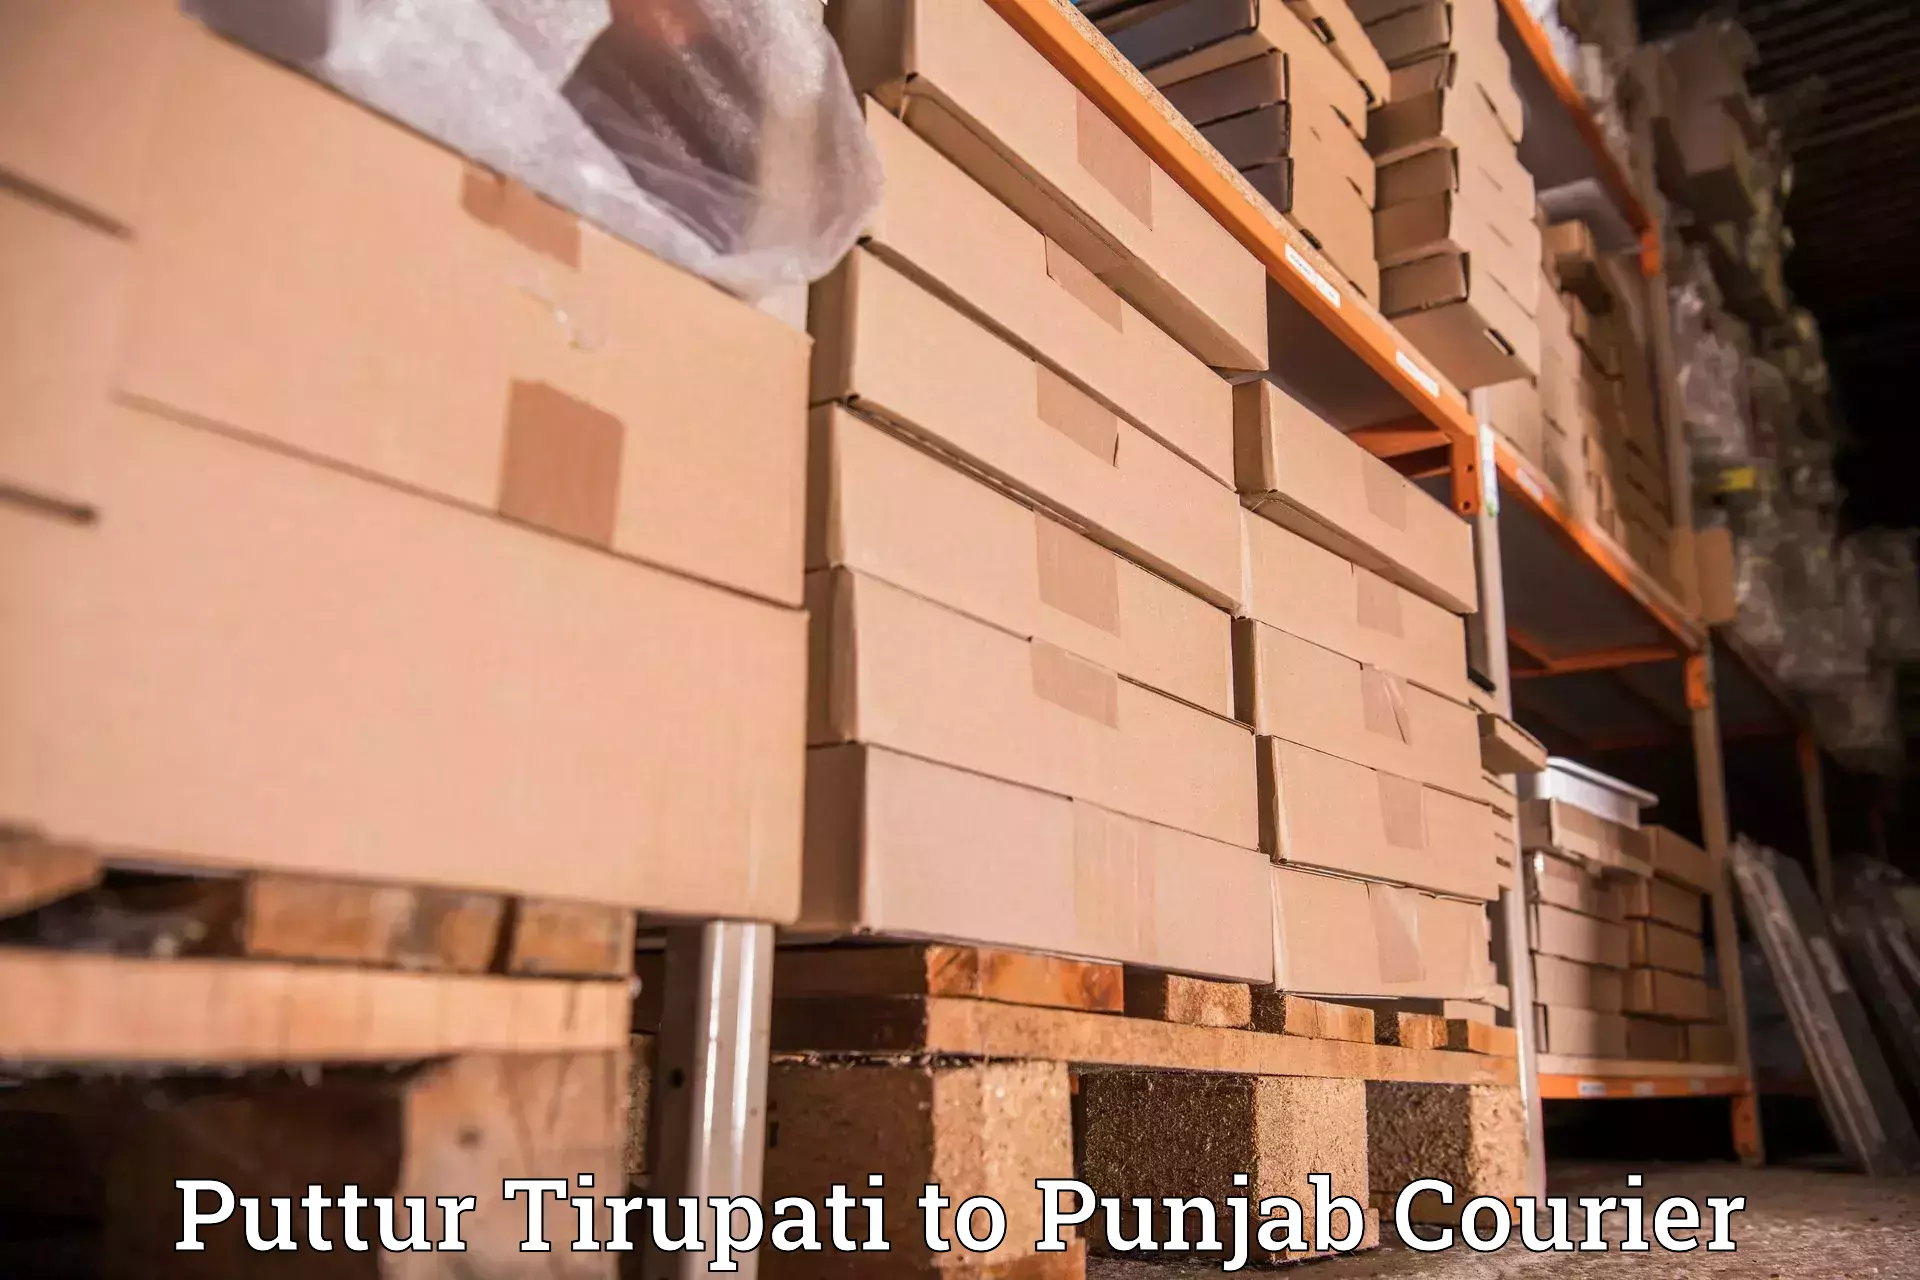 On-call courier service Puttur Tirupati to Ropar